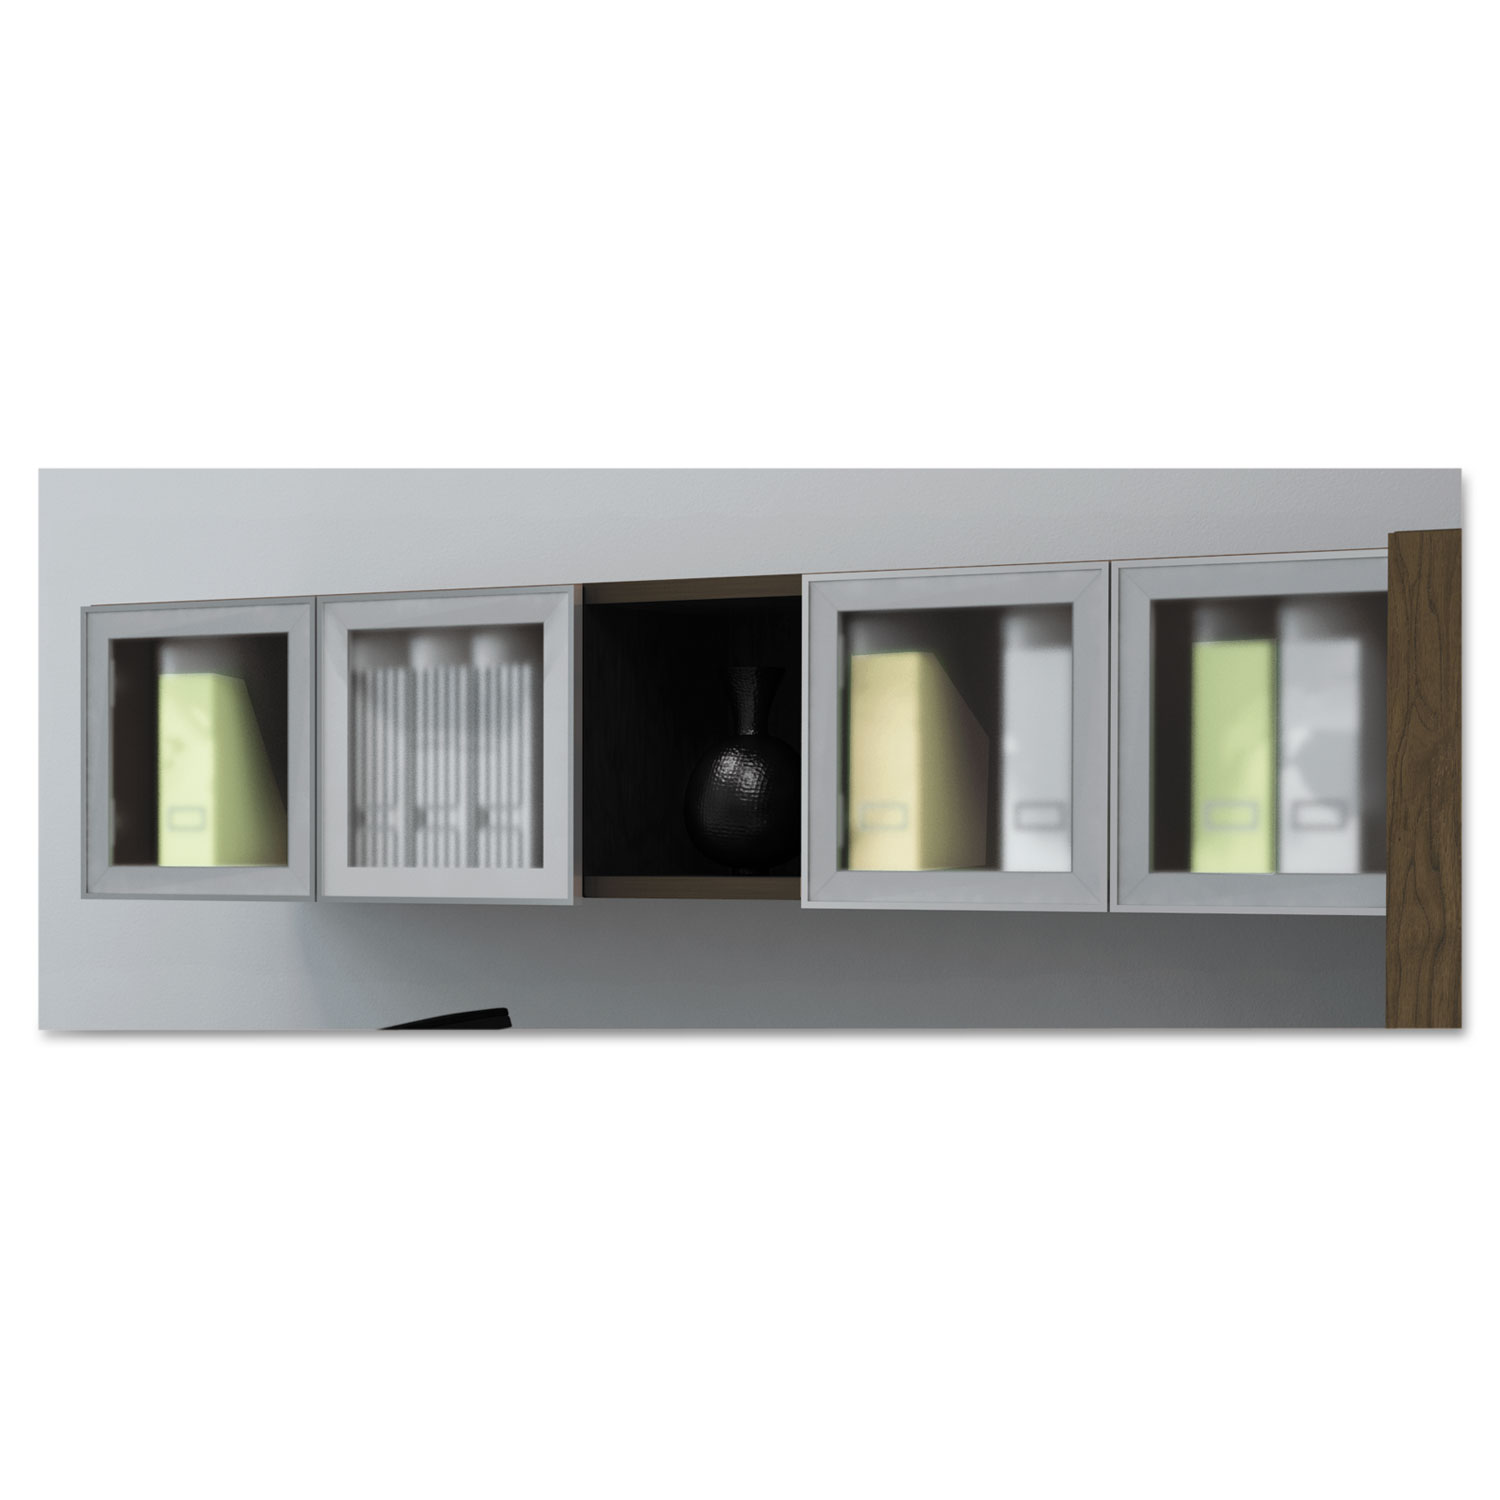  Safco EZH72FAHA e5 Series Overhead Storage Cabinet, 72w x 15d x 15h, Walnut (MLNEZH72FAHA) 